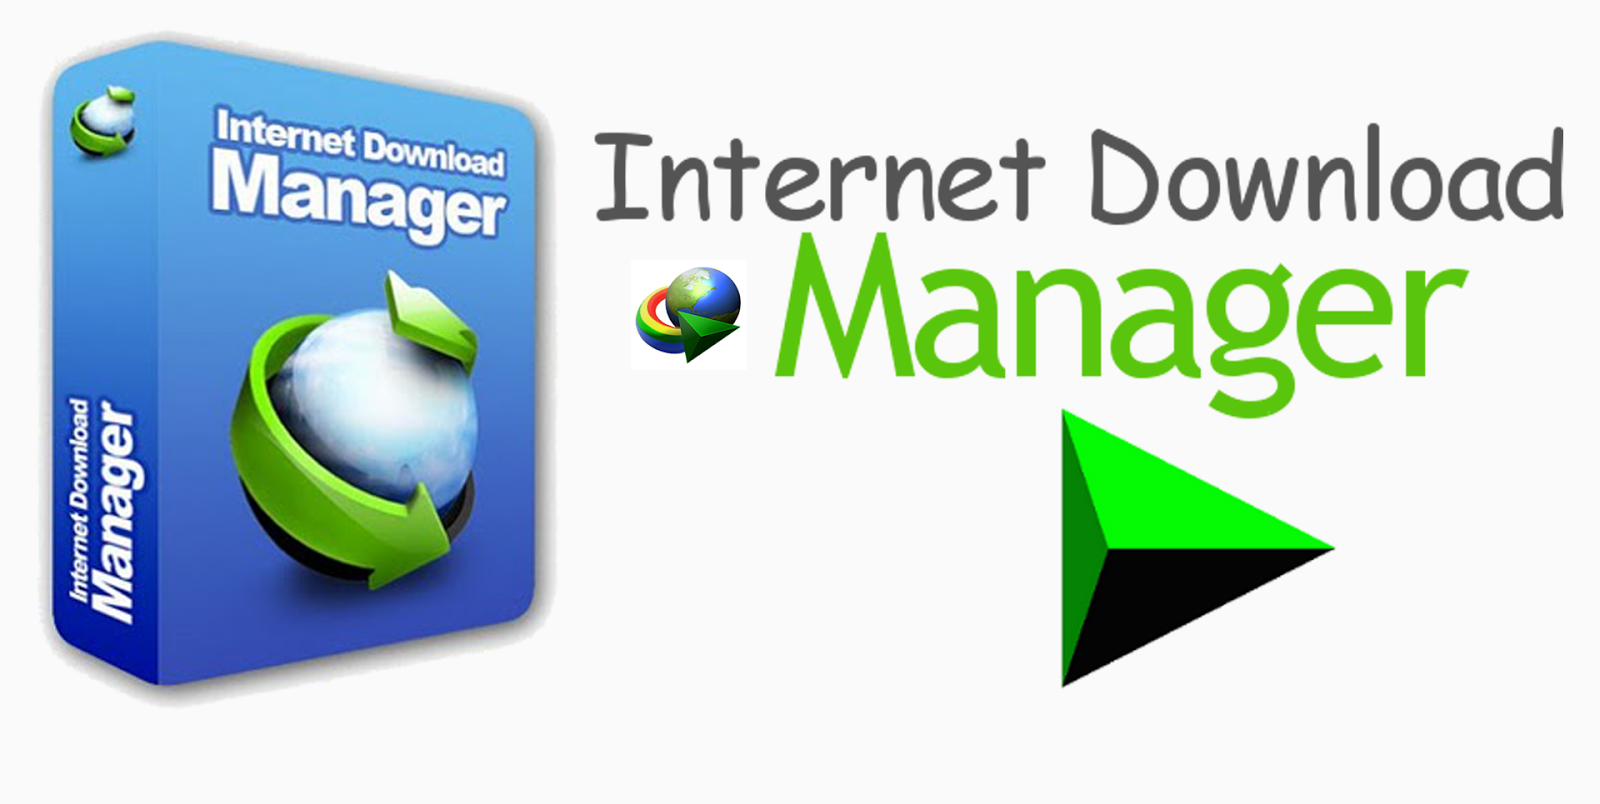 Internet download manager 6.32 build crack windows photo viewer windows 10 download free